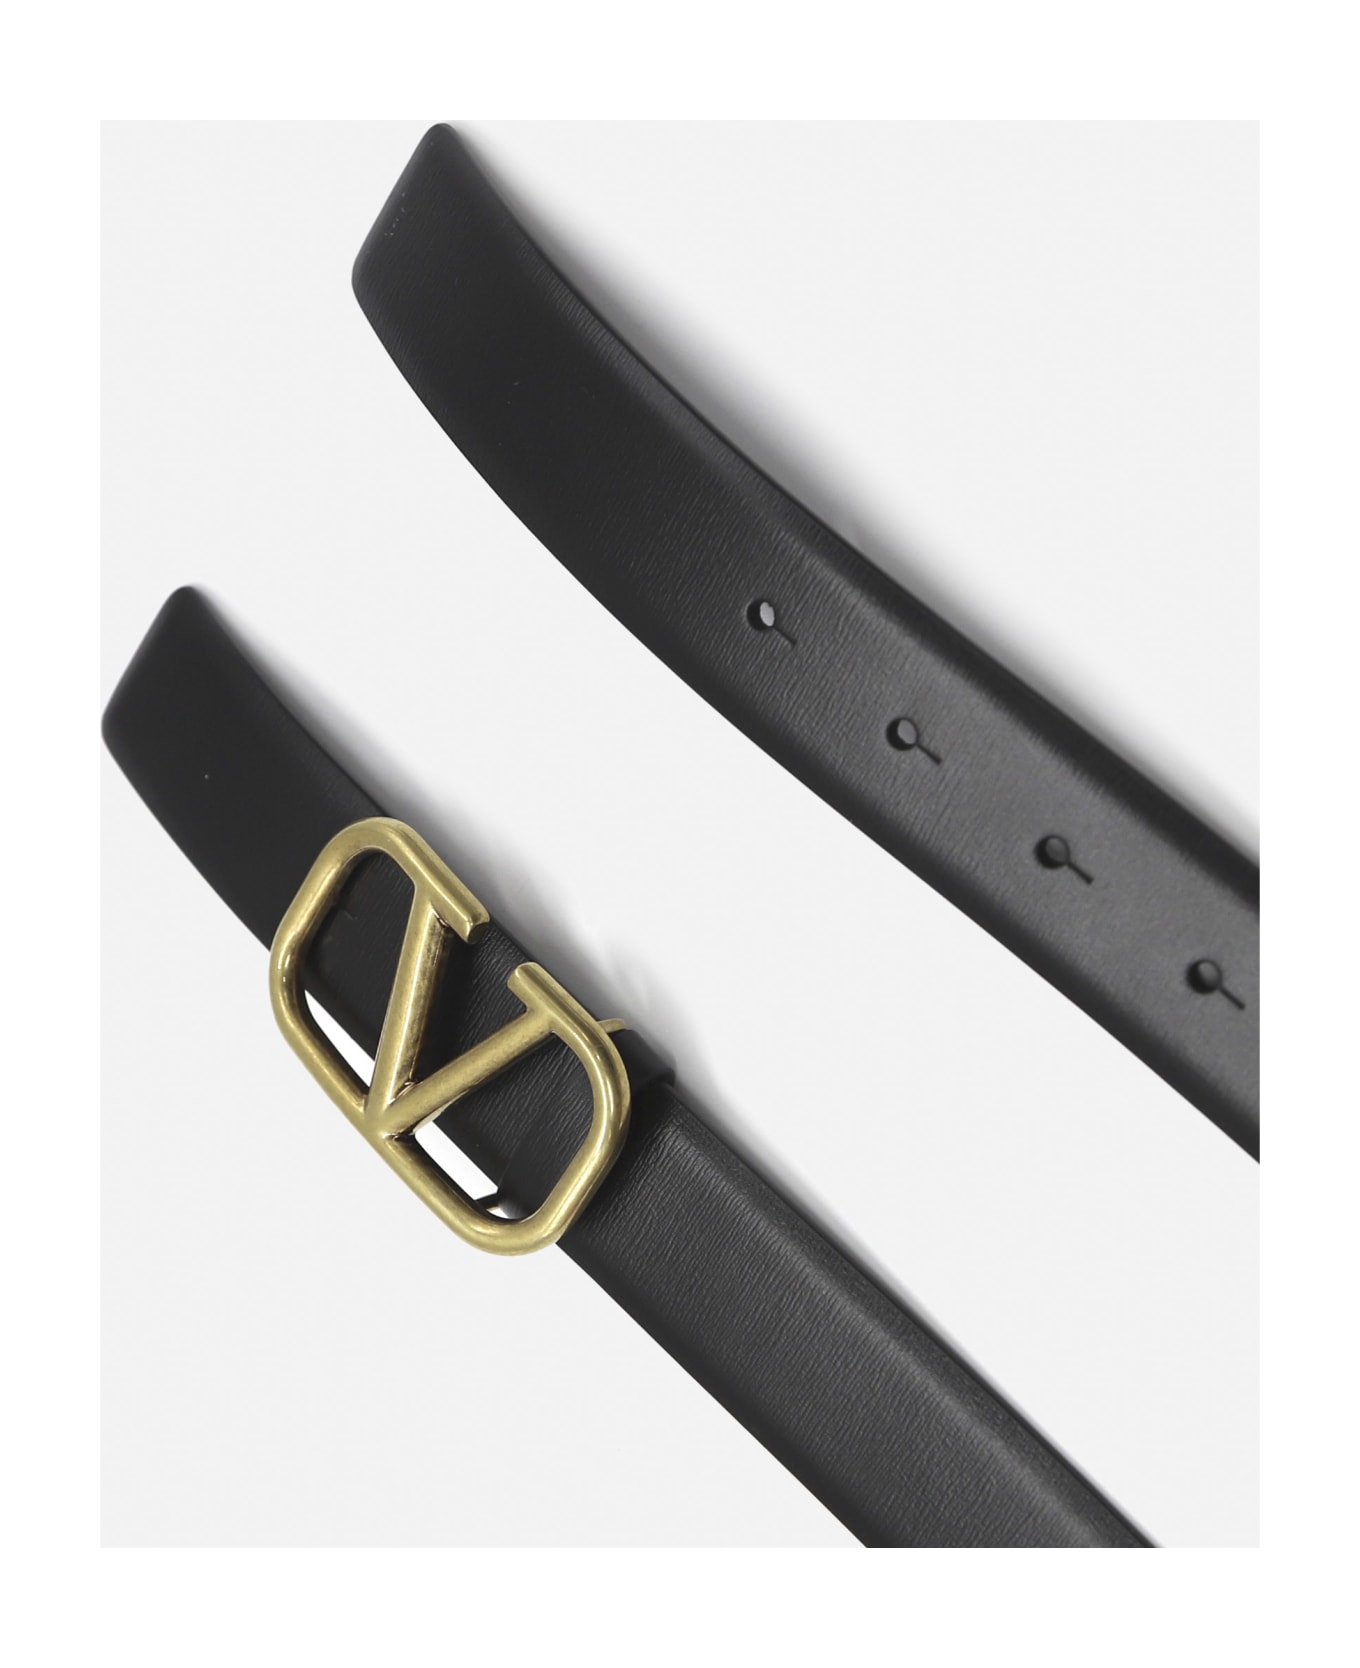 Valentino Garavani Vlogo Signature Leather Belt - NERO ベルト